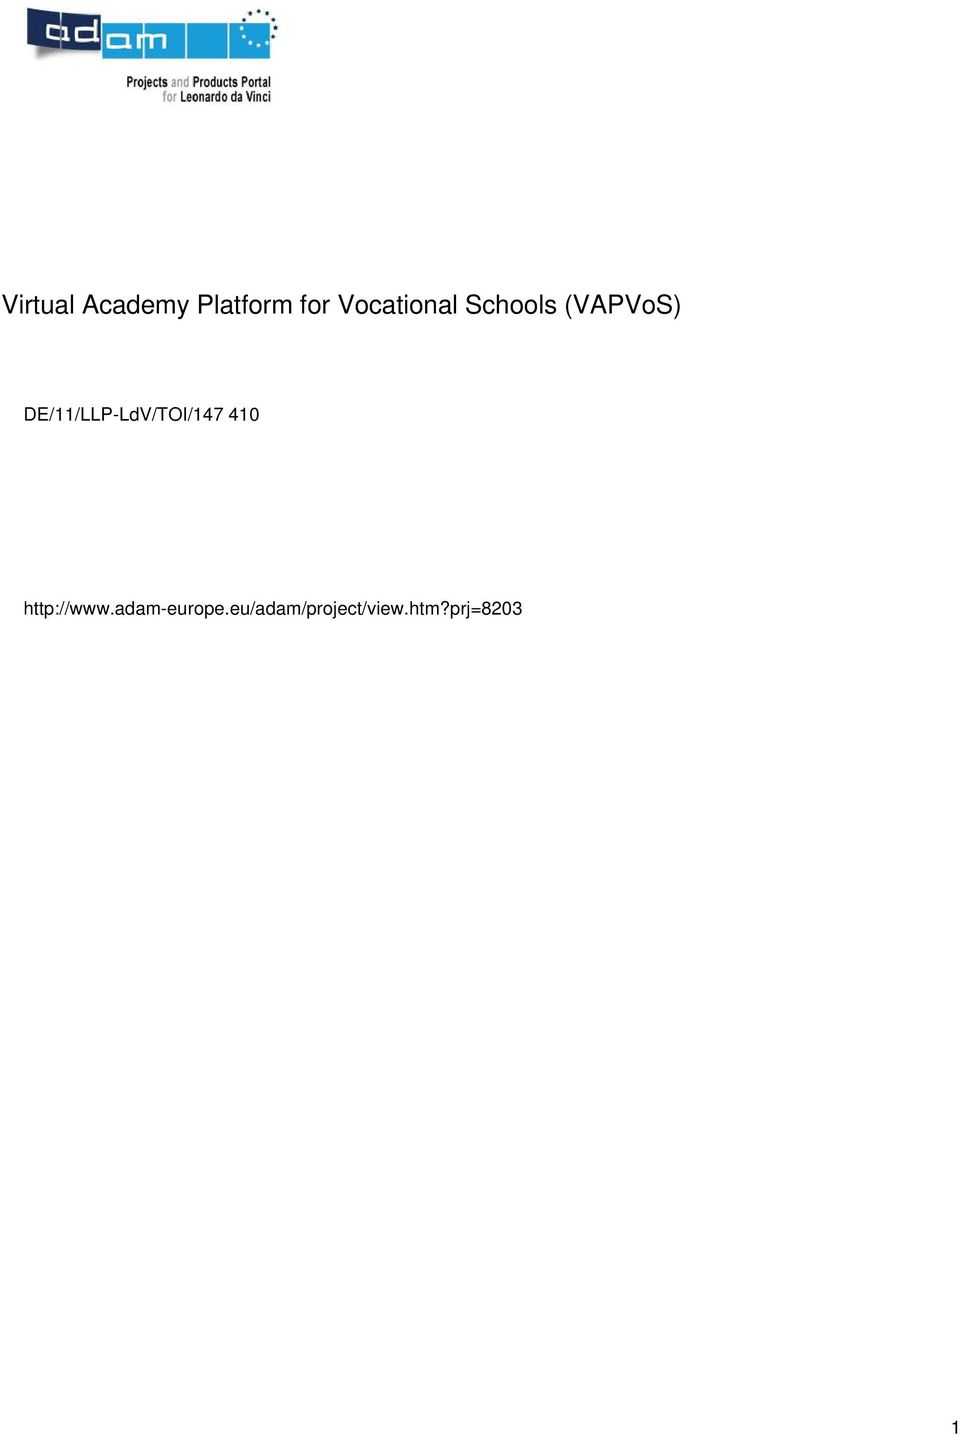 Vocational Schools